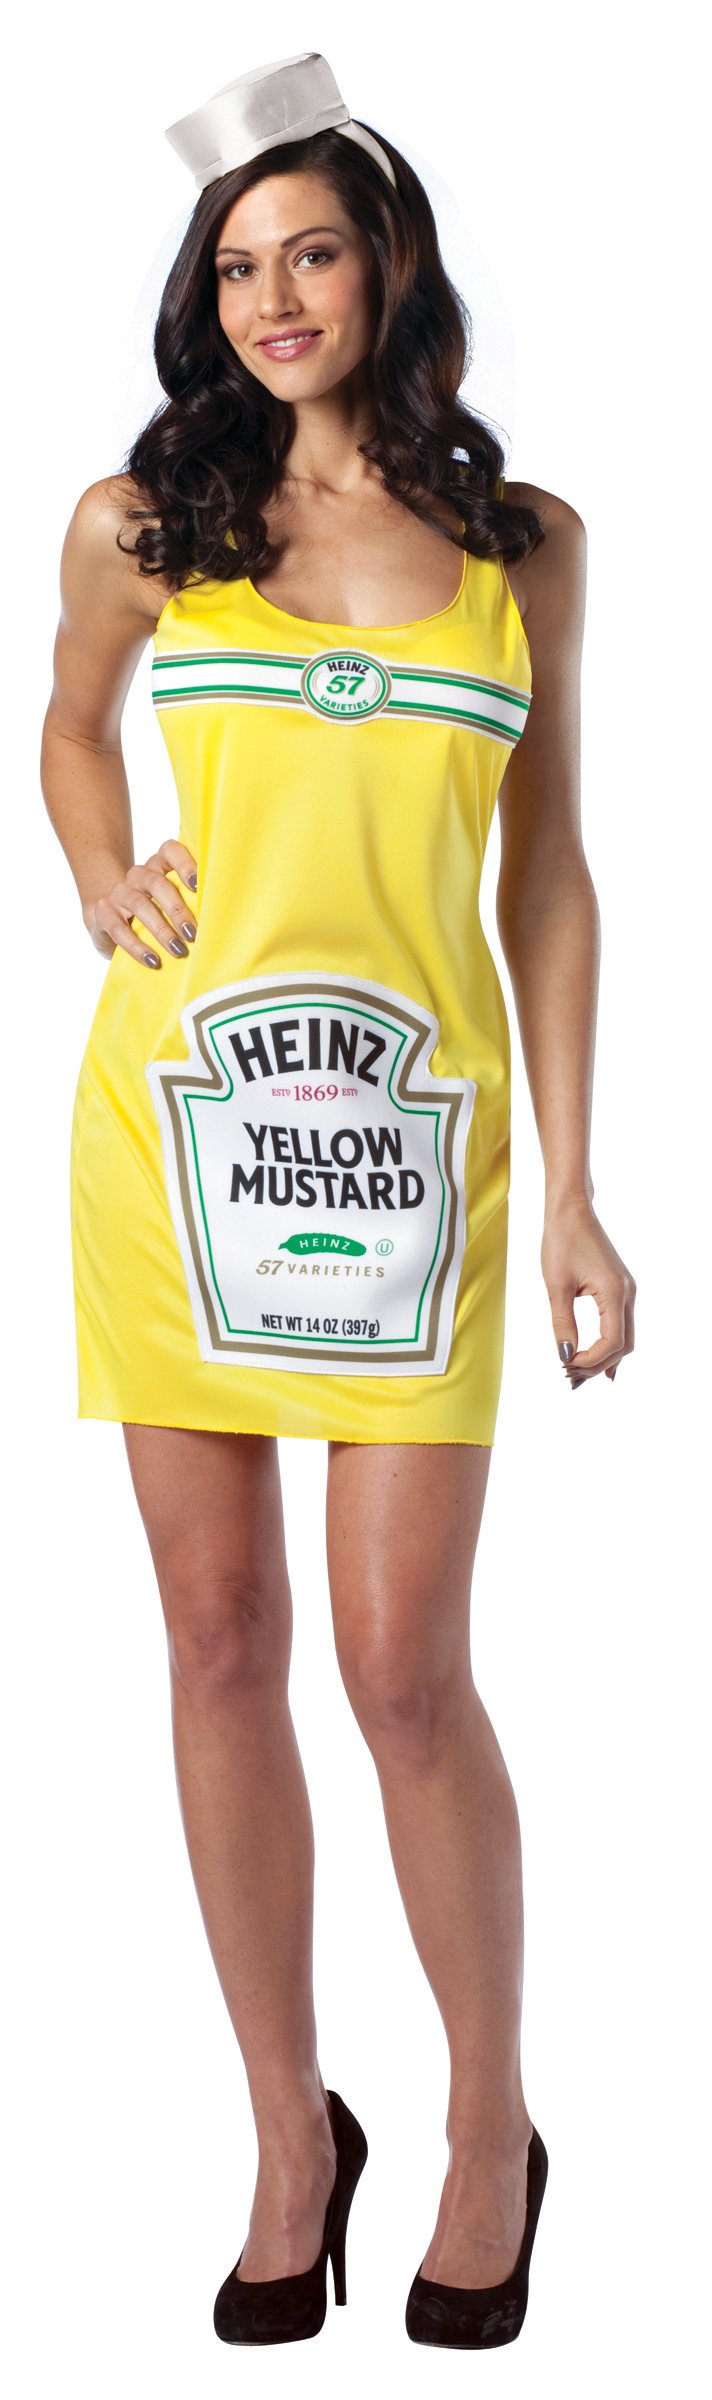 Heinz Mustard Tank Dress Adult Costume